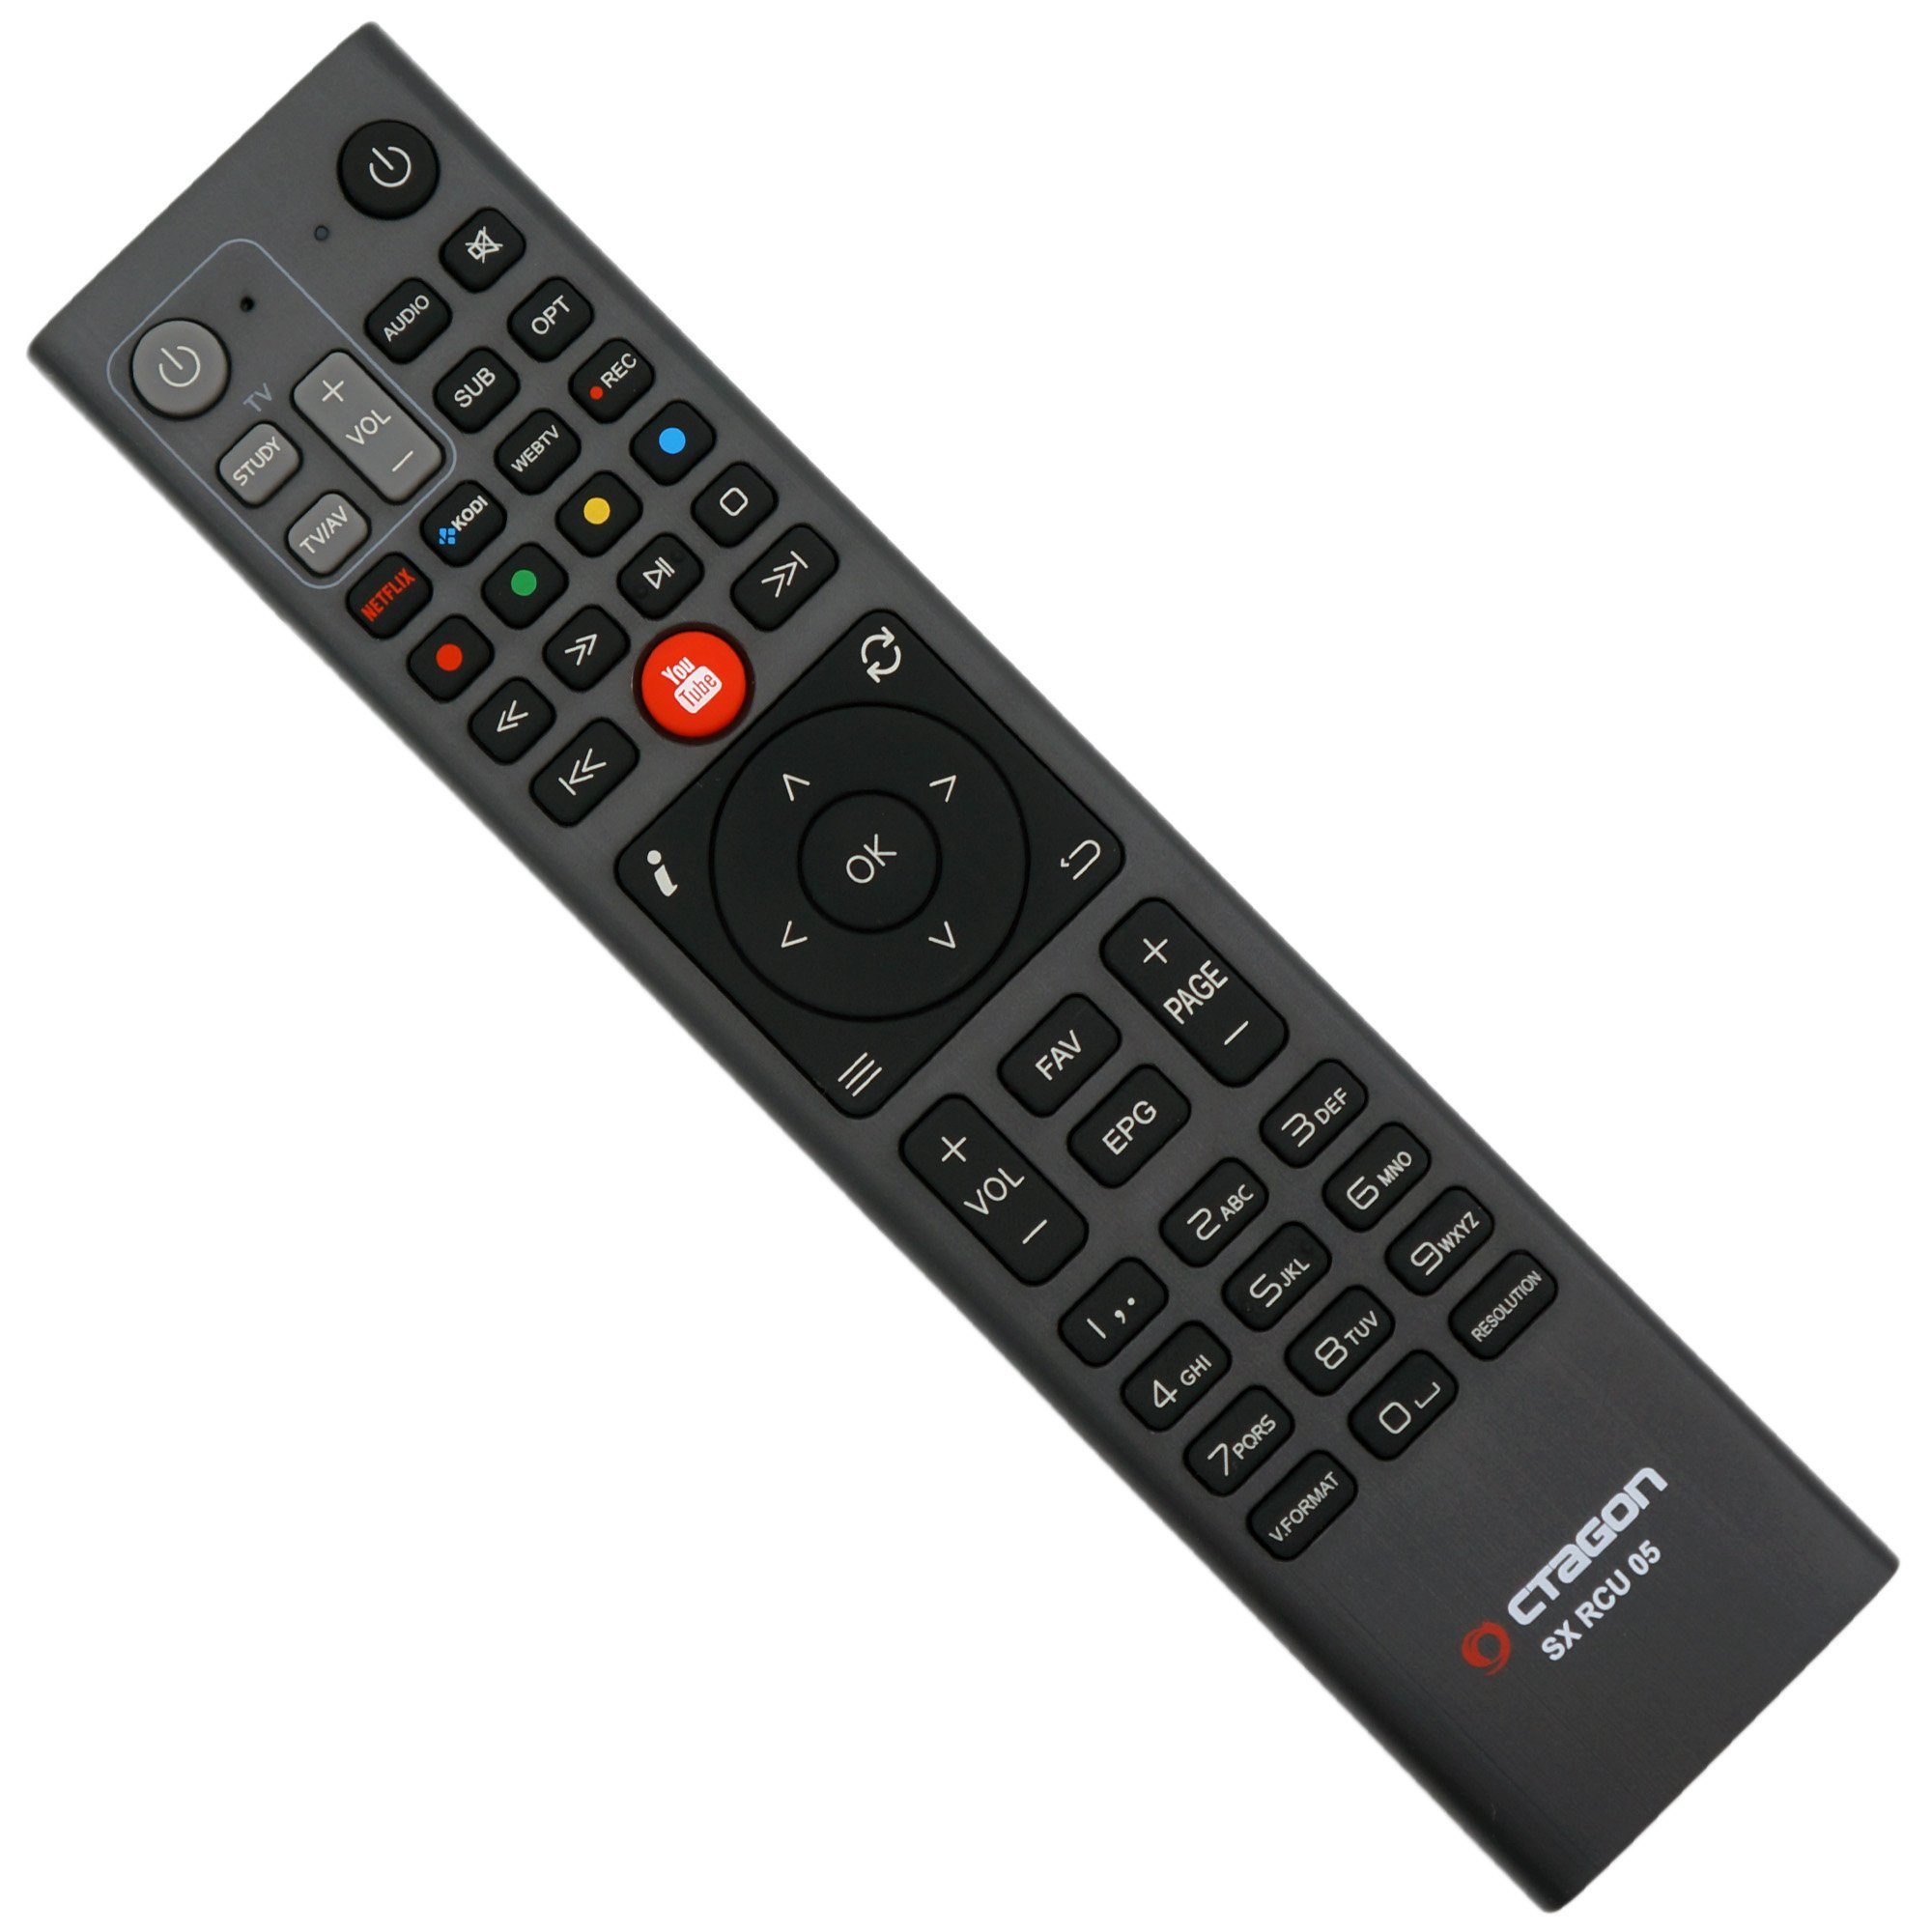 OCTAGON Streaming-Box SX988 IPTV UHD Mbit/s Set-Top Smart HEVC H.265 + TV Box 4K IP 300